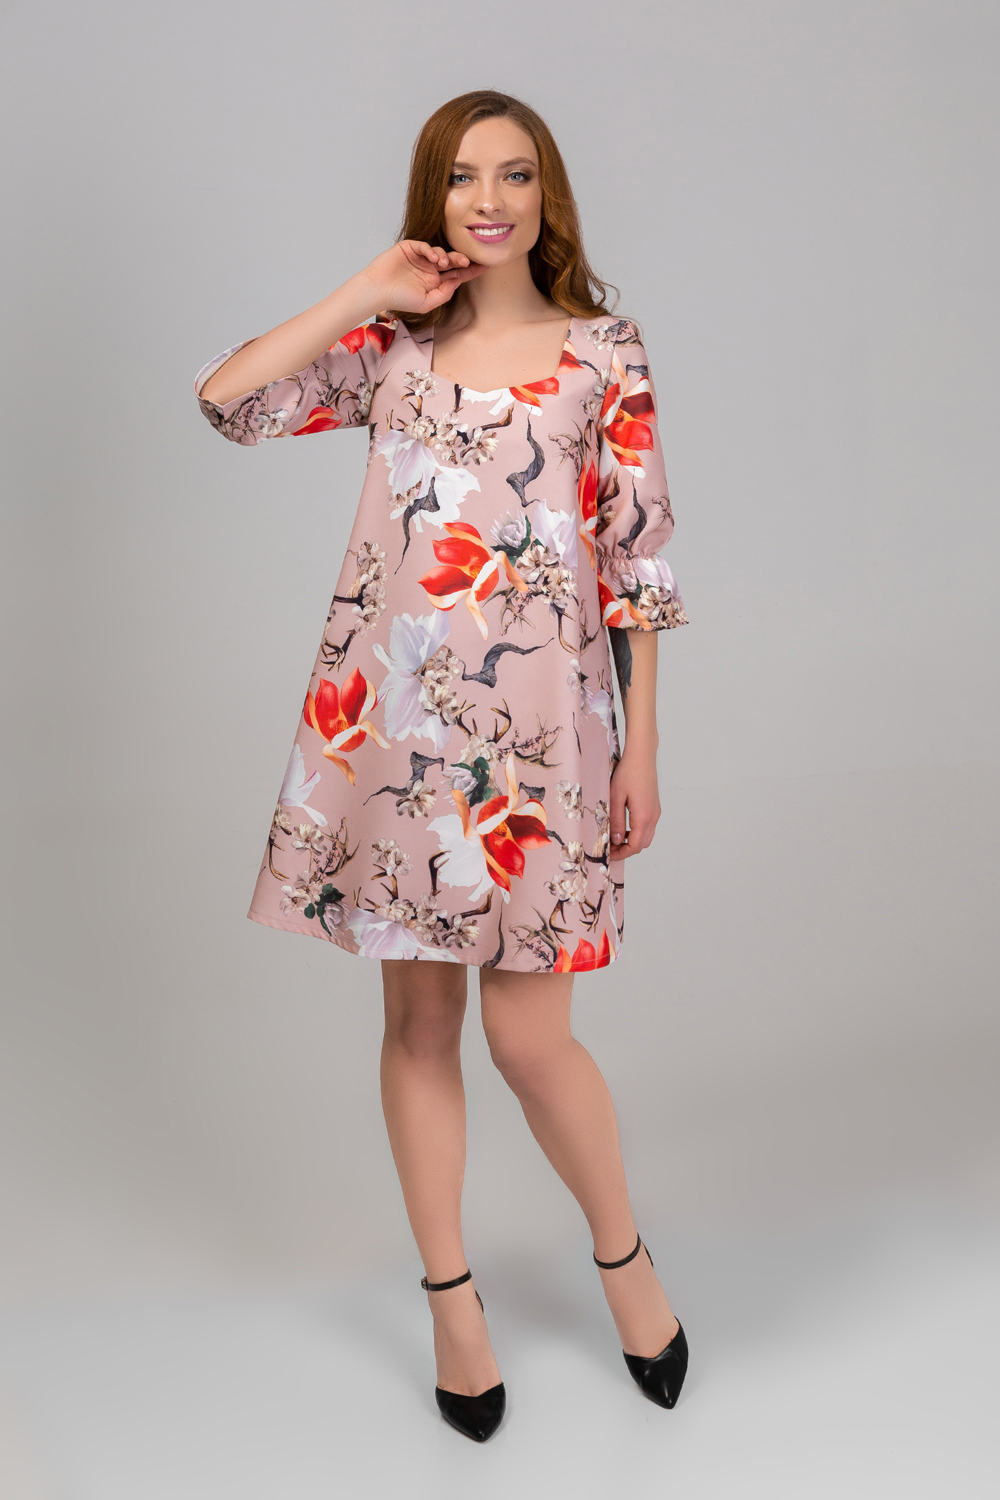 Loose dress in floral print